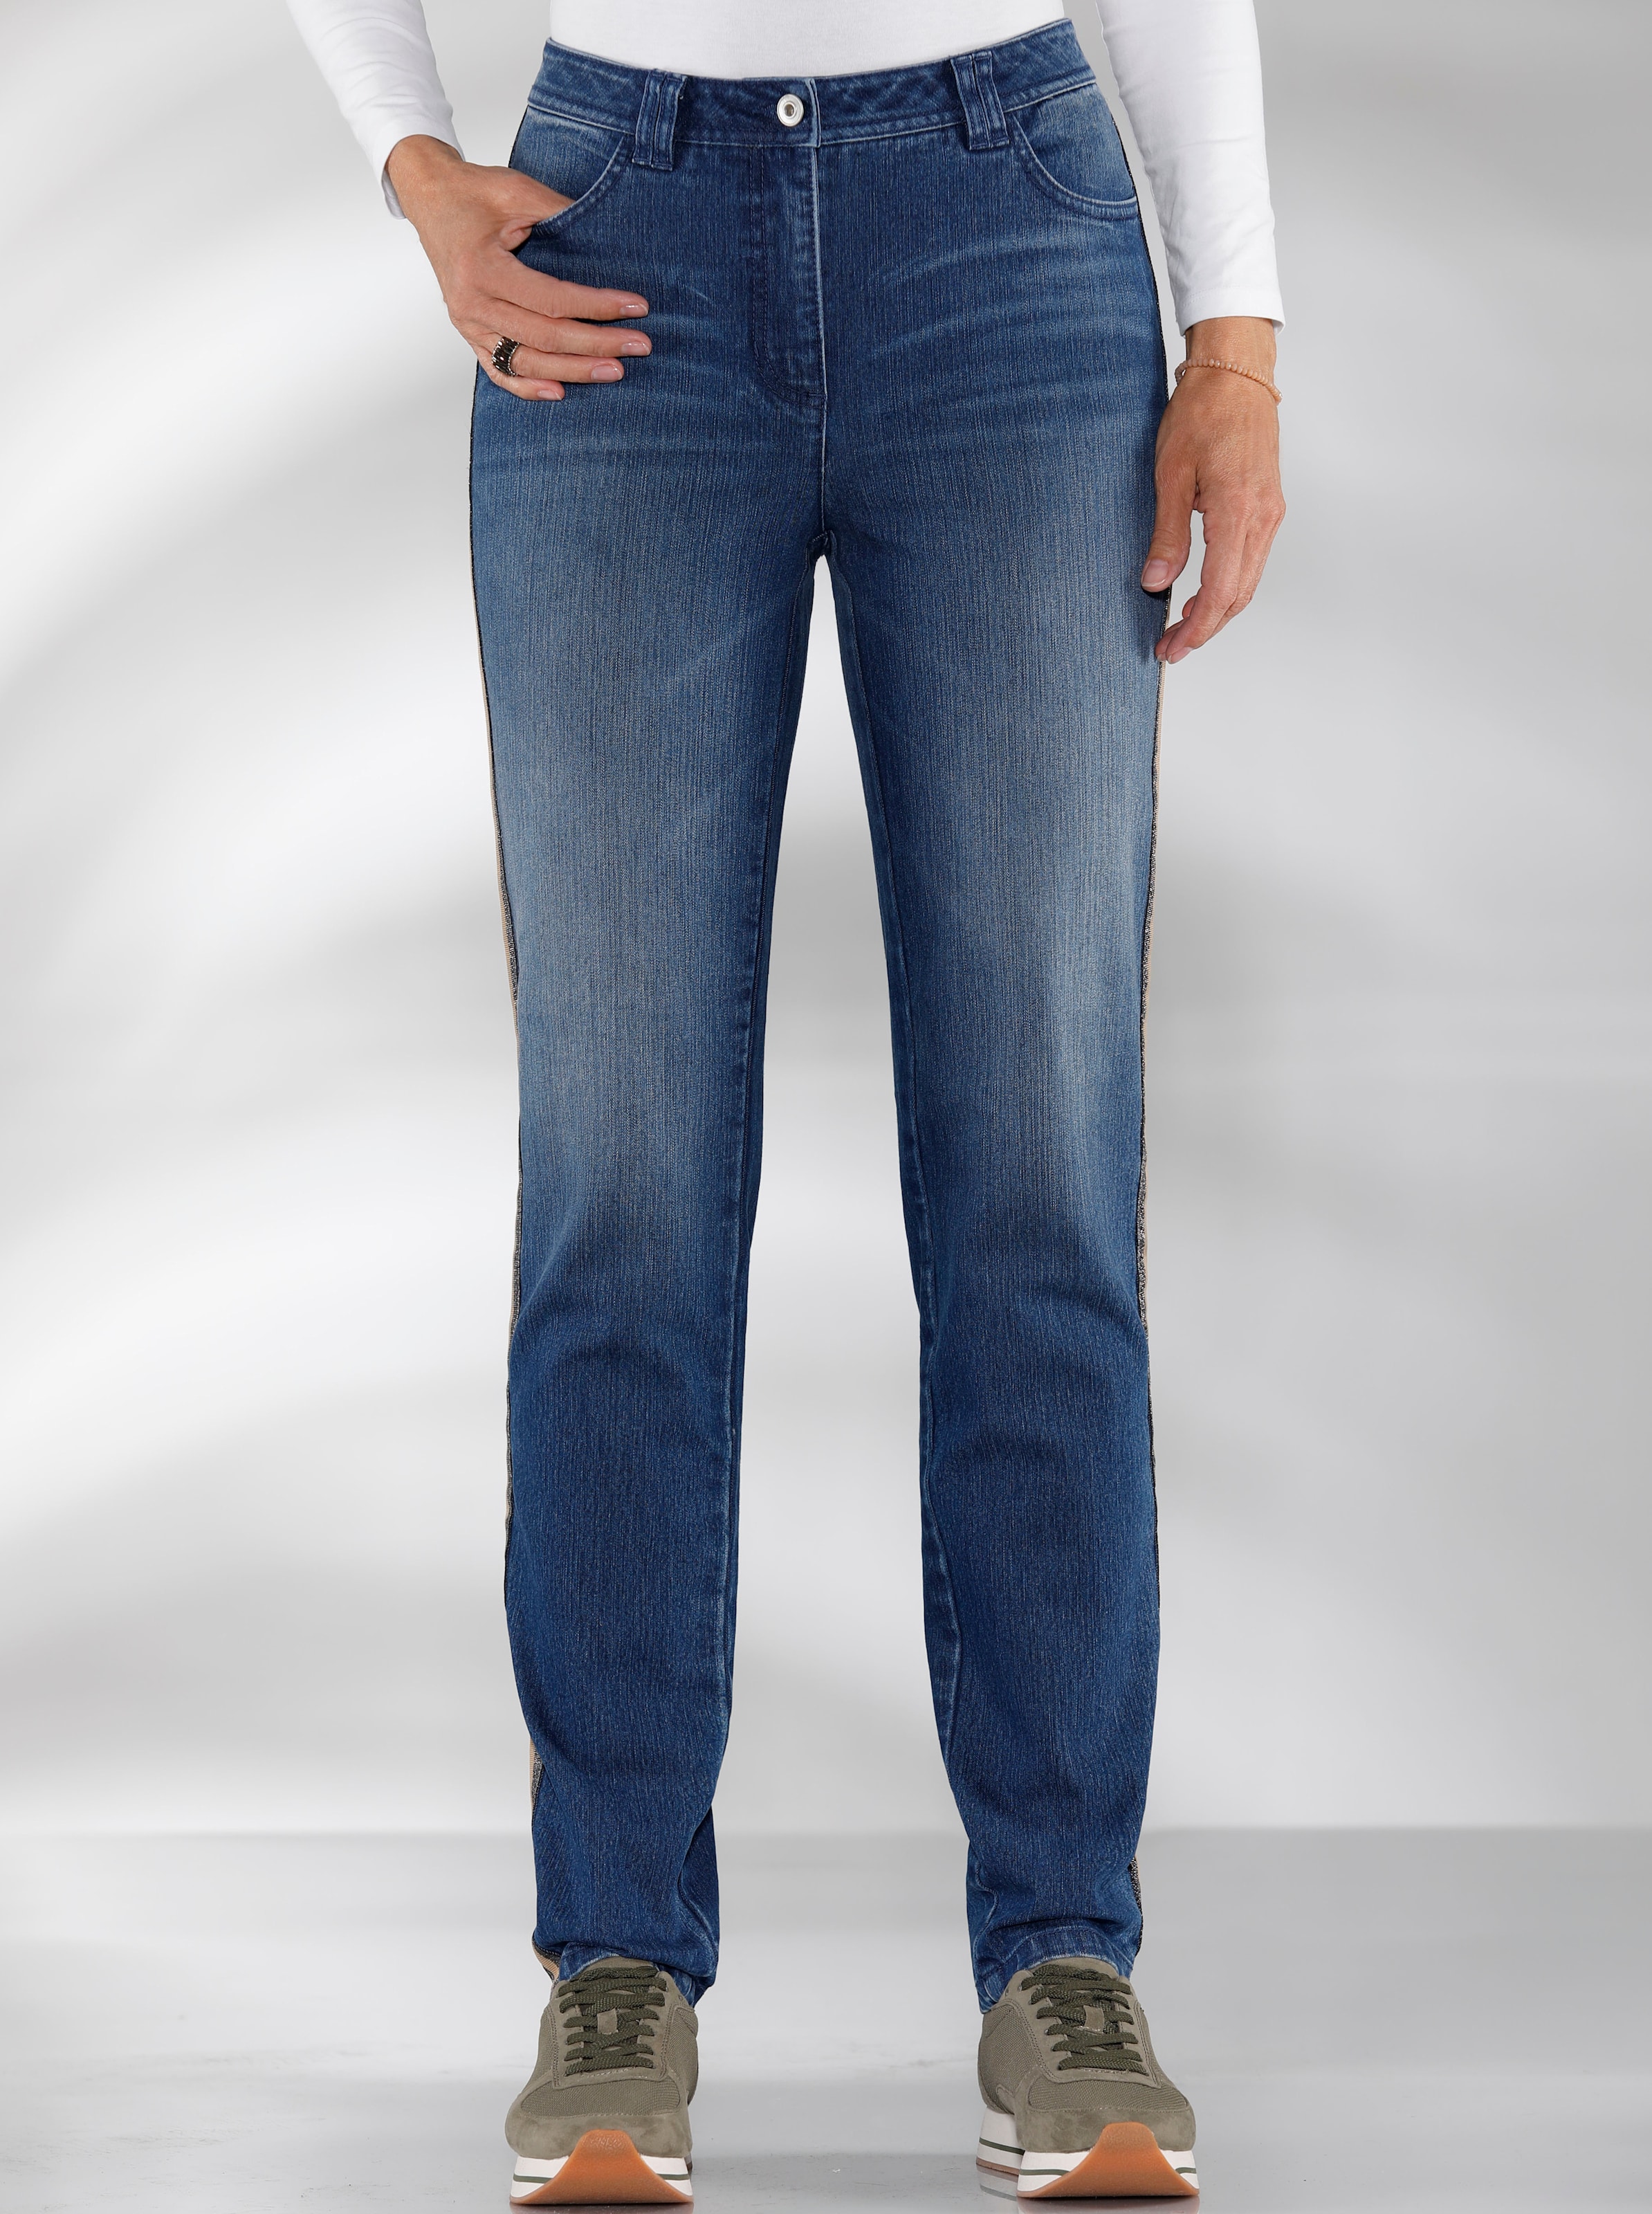 Witt Damen Jeans, blue-stone-washed